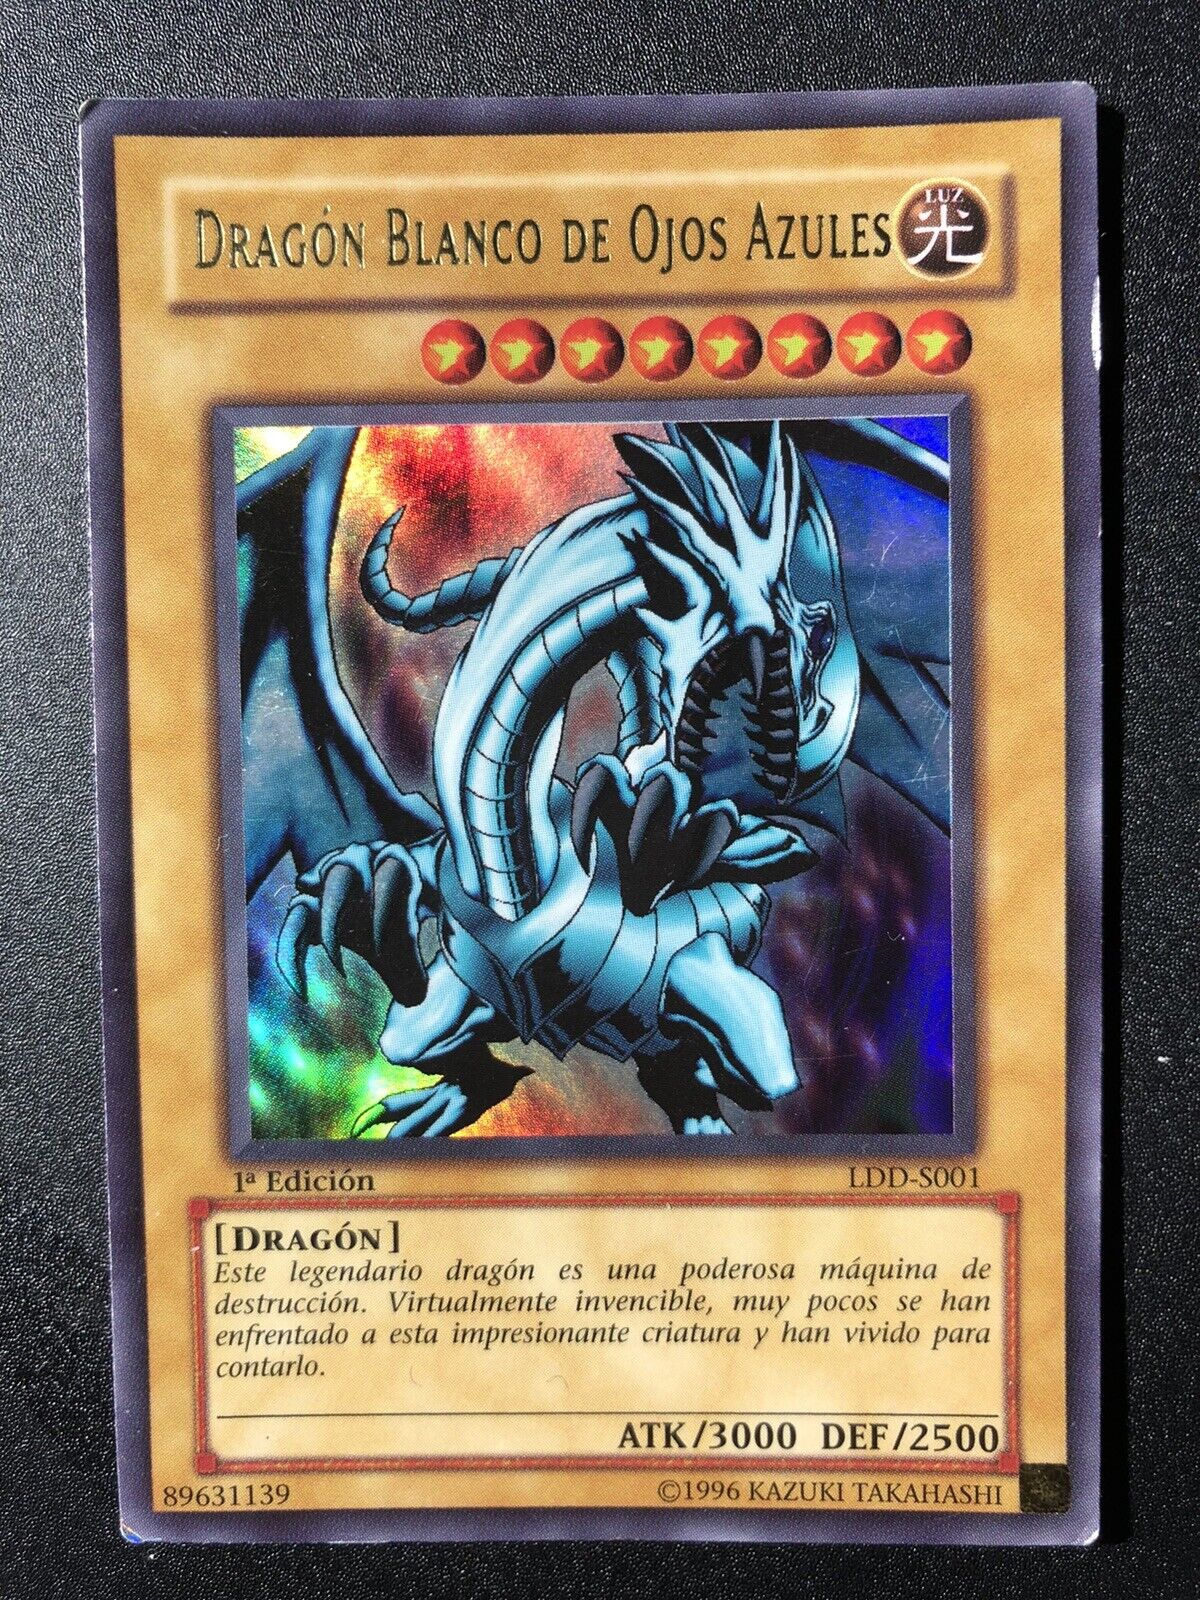 Details zu  Blue Eyes White Dragon Dragon Blanco de Ojos Azules LDD-s001 1st Edition Edición Postversand auffüllen